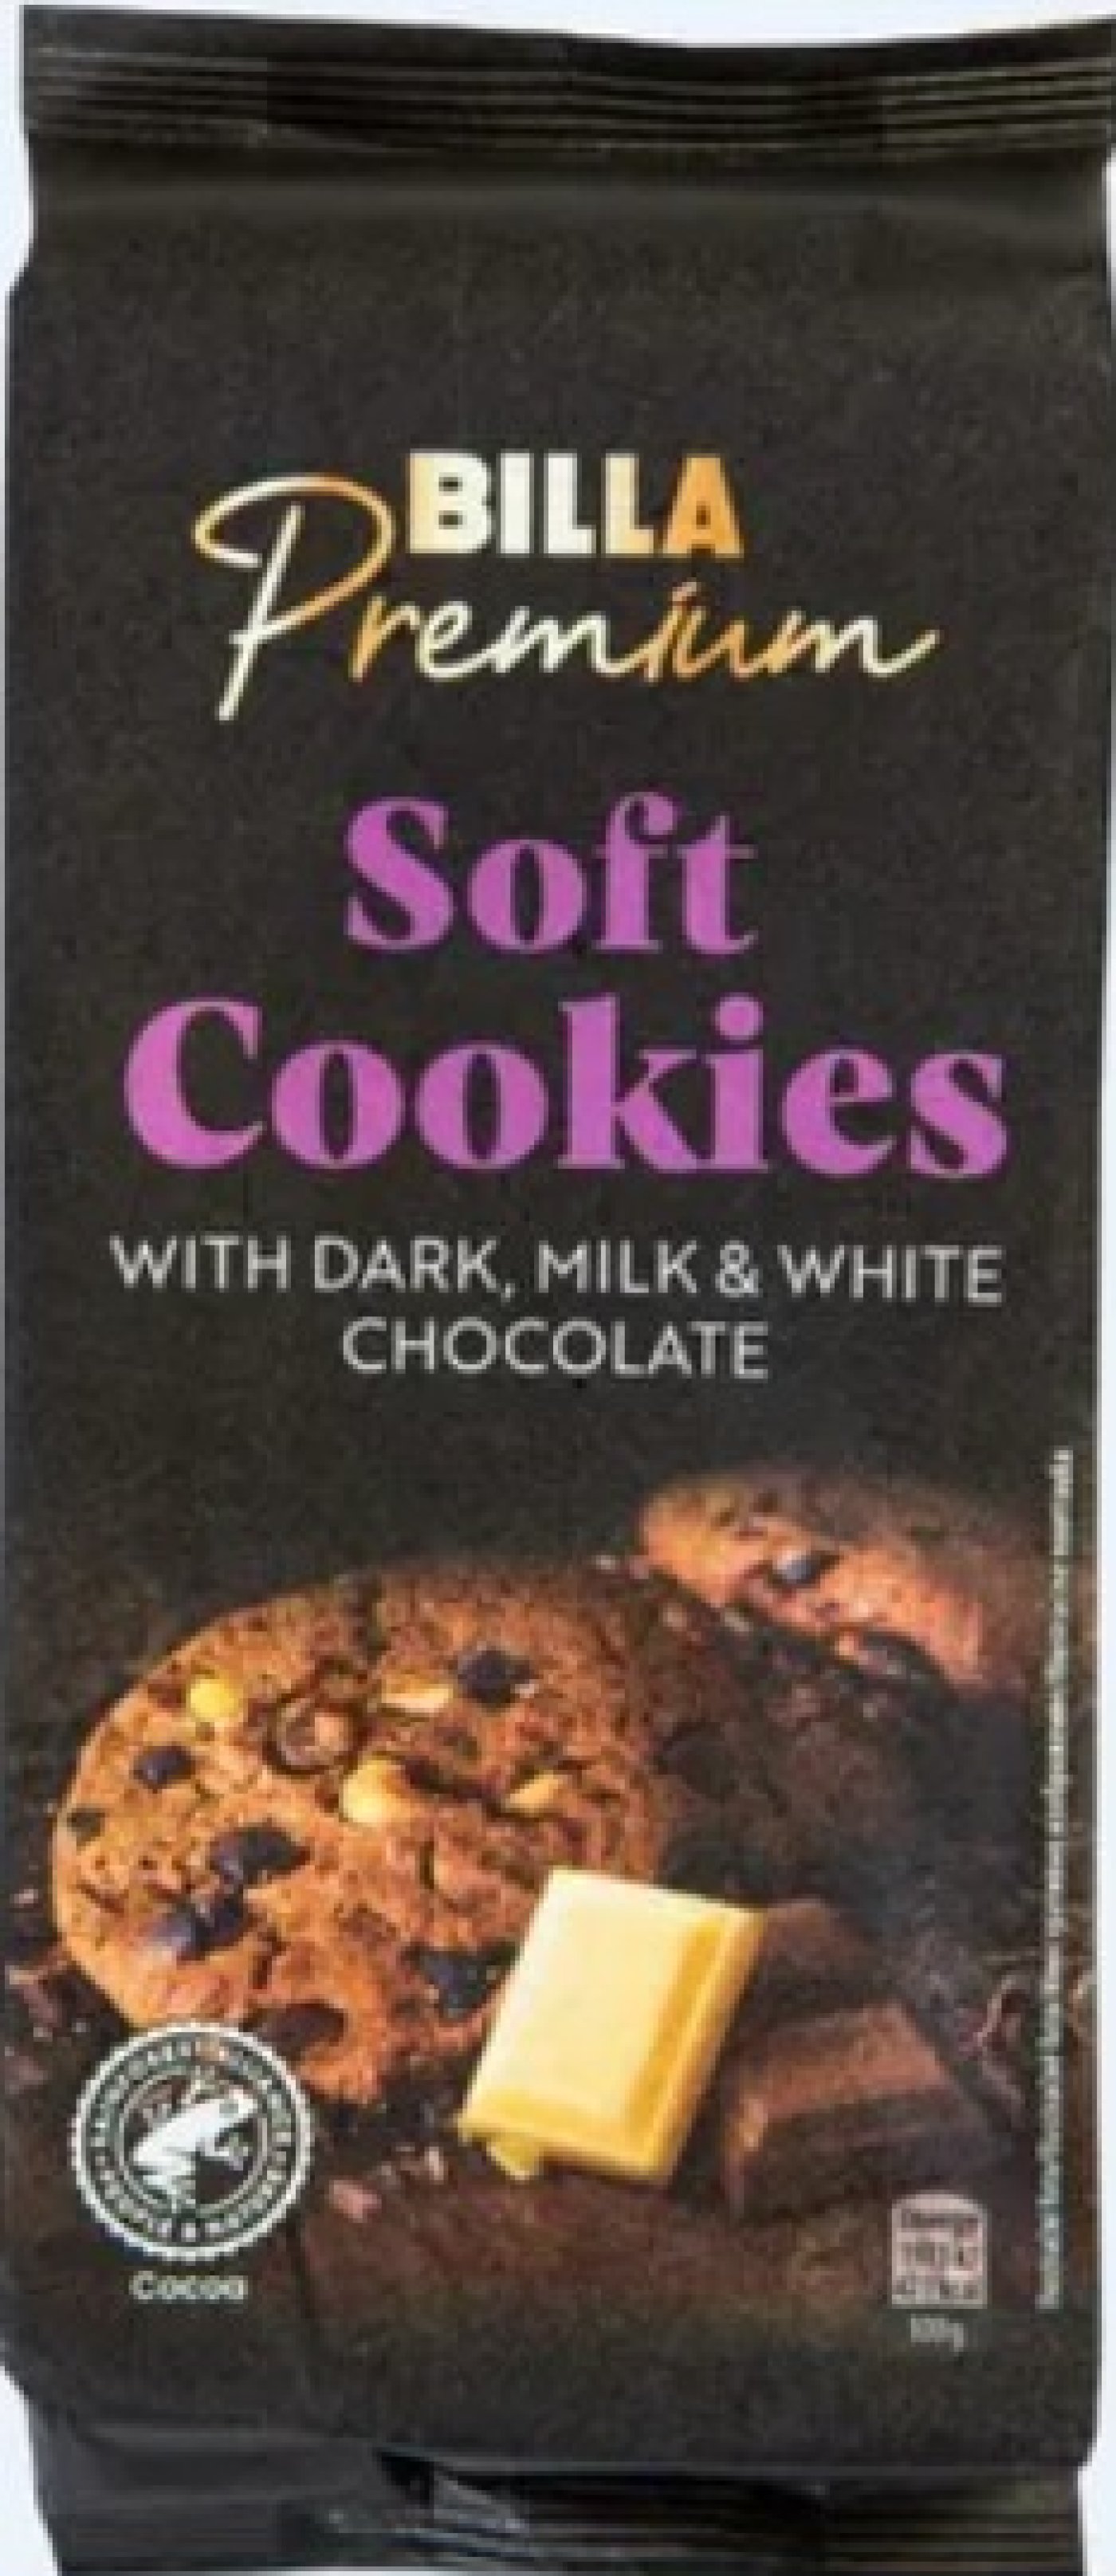 BILLA Premium soft cookies with dark, milk & white chocolate 210 g